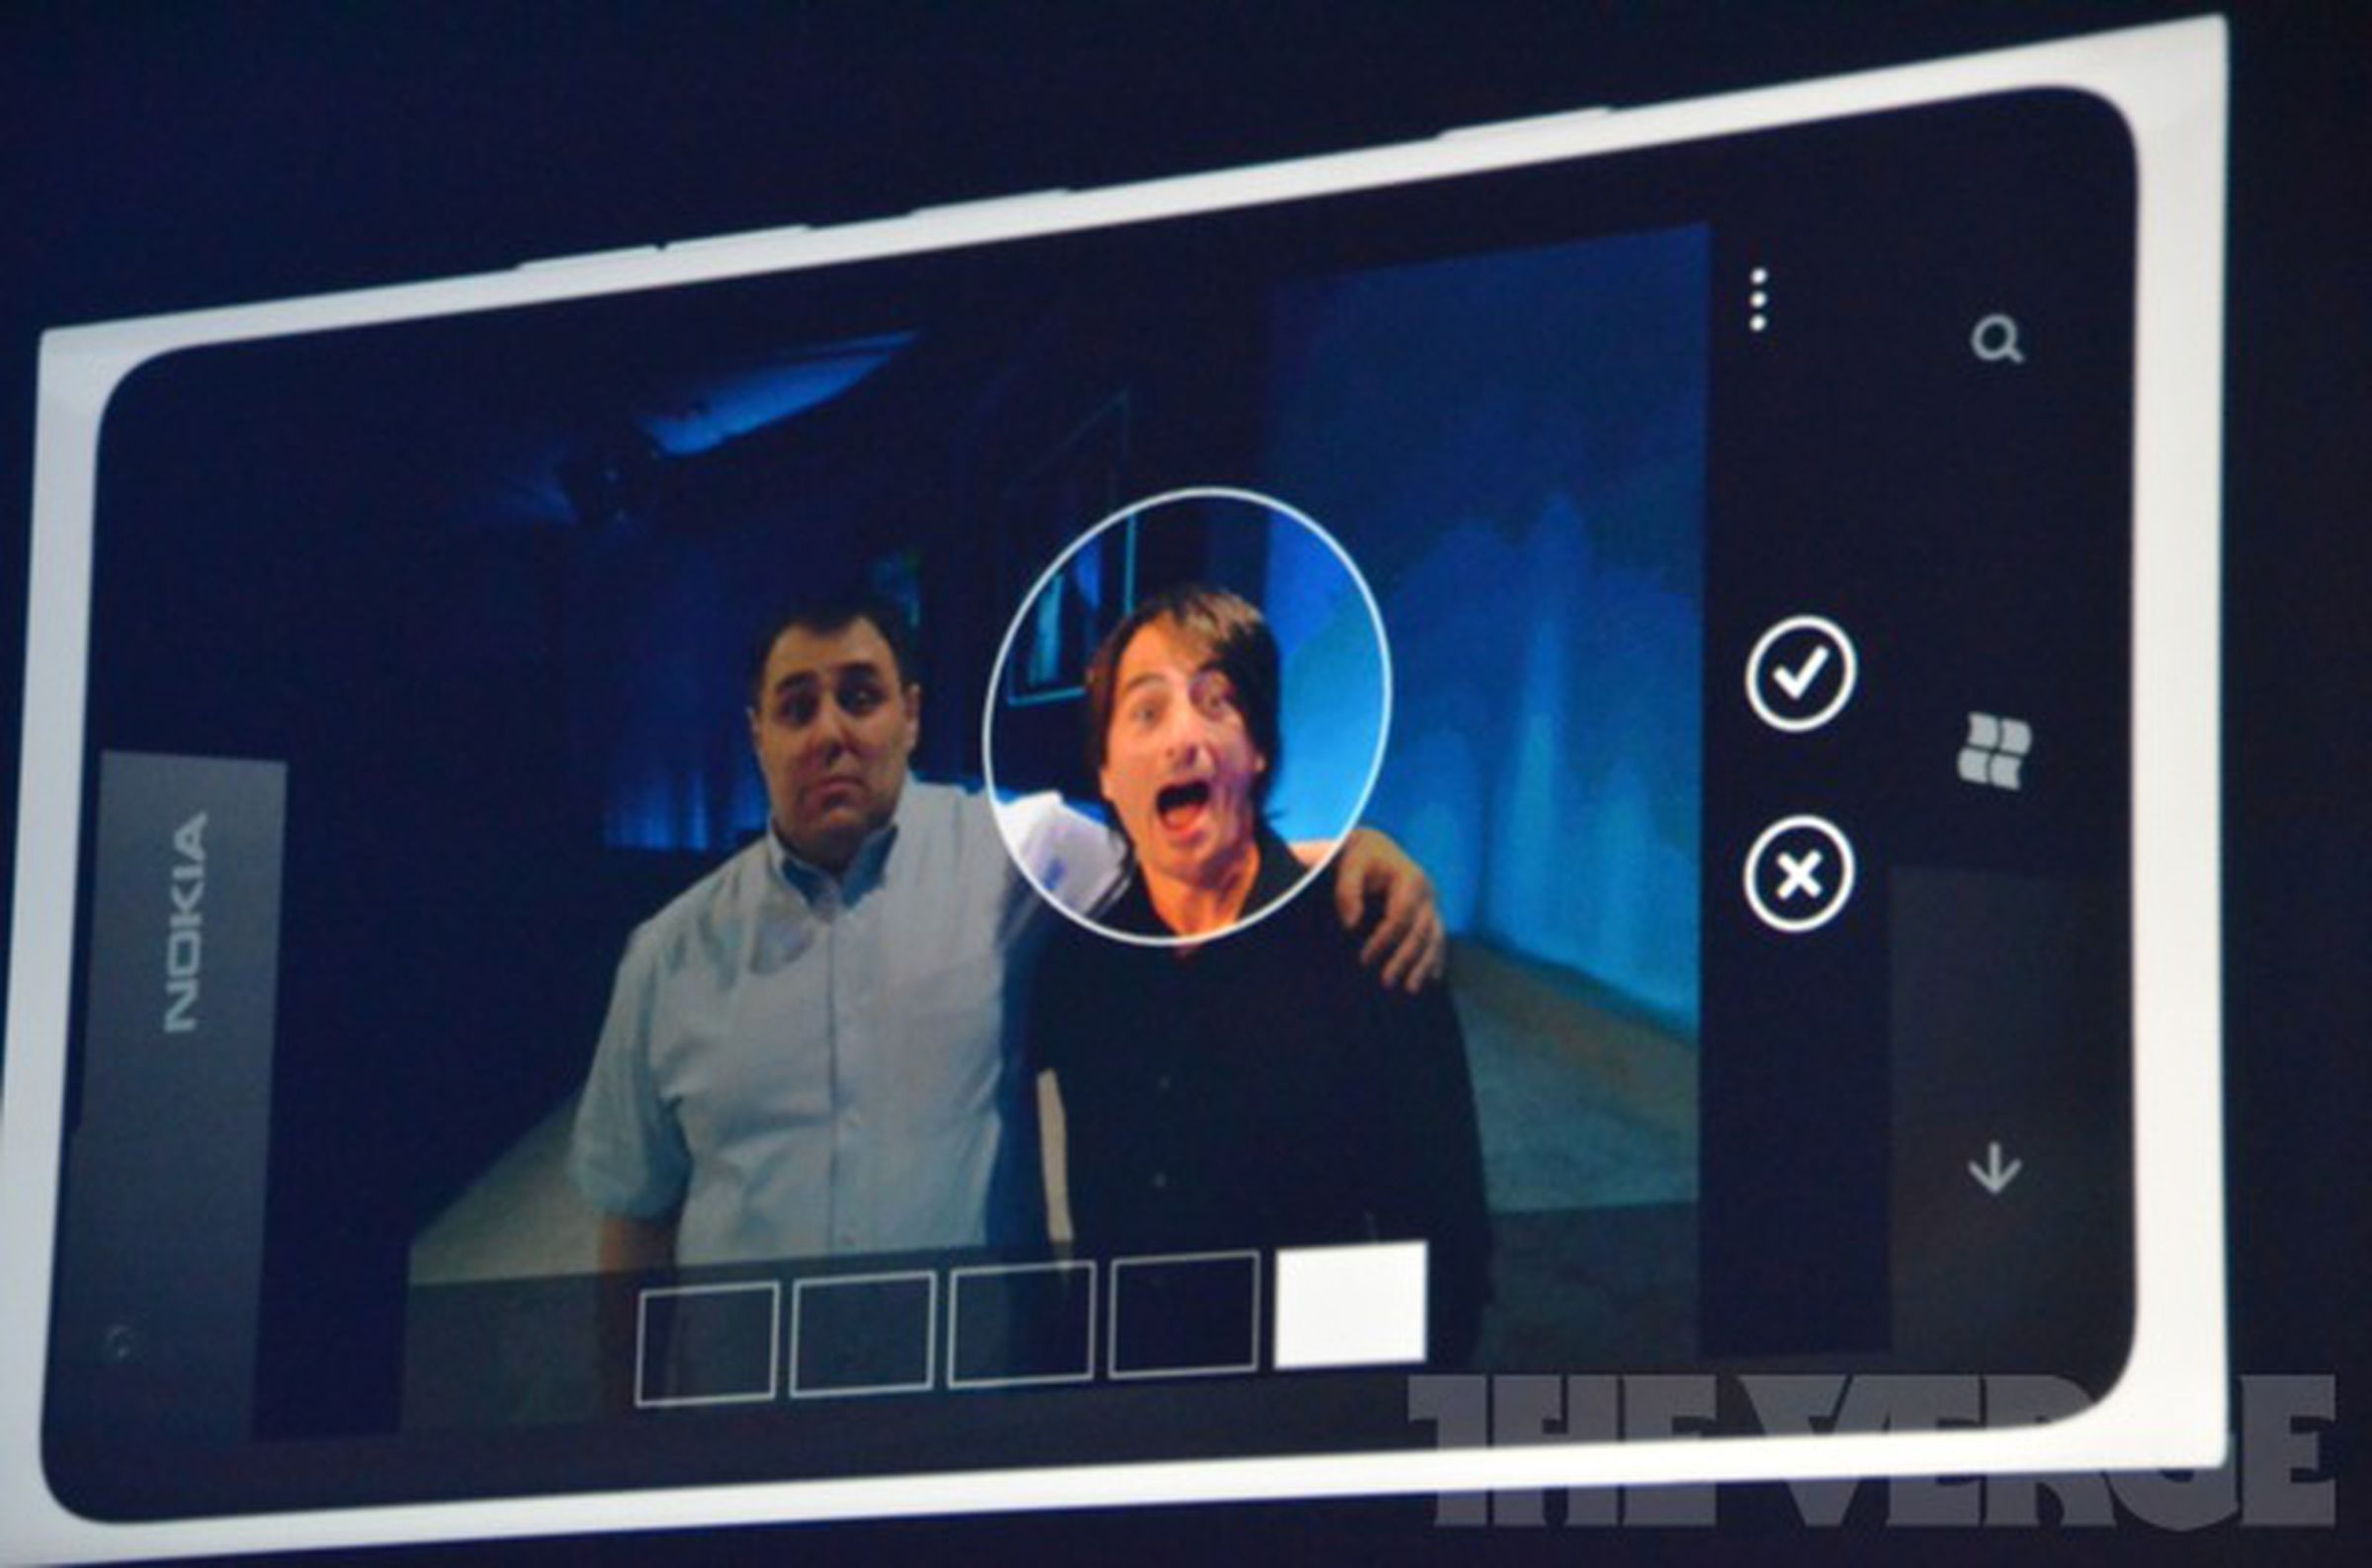 Windows Phone 8 apps liveblog photos